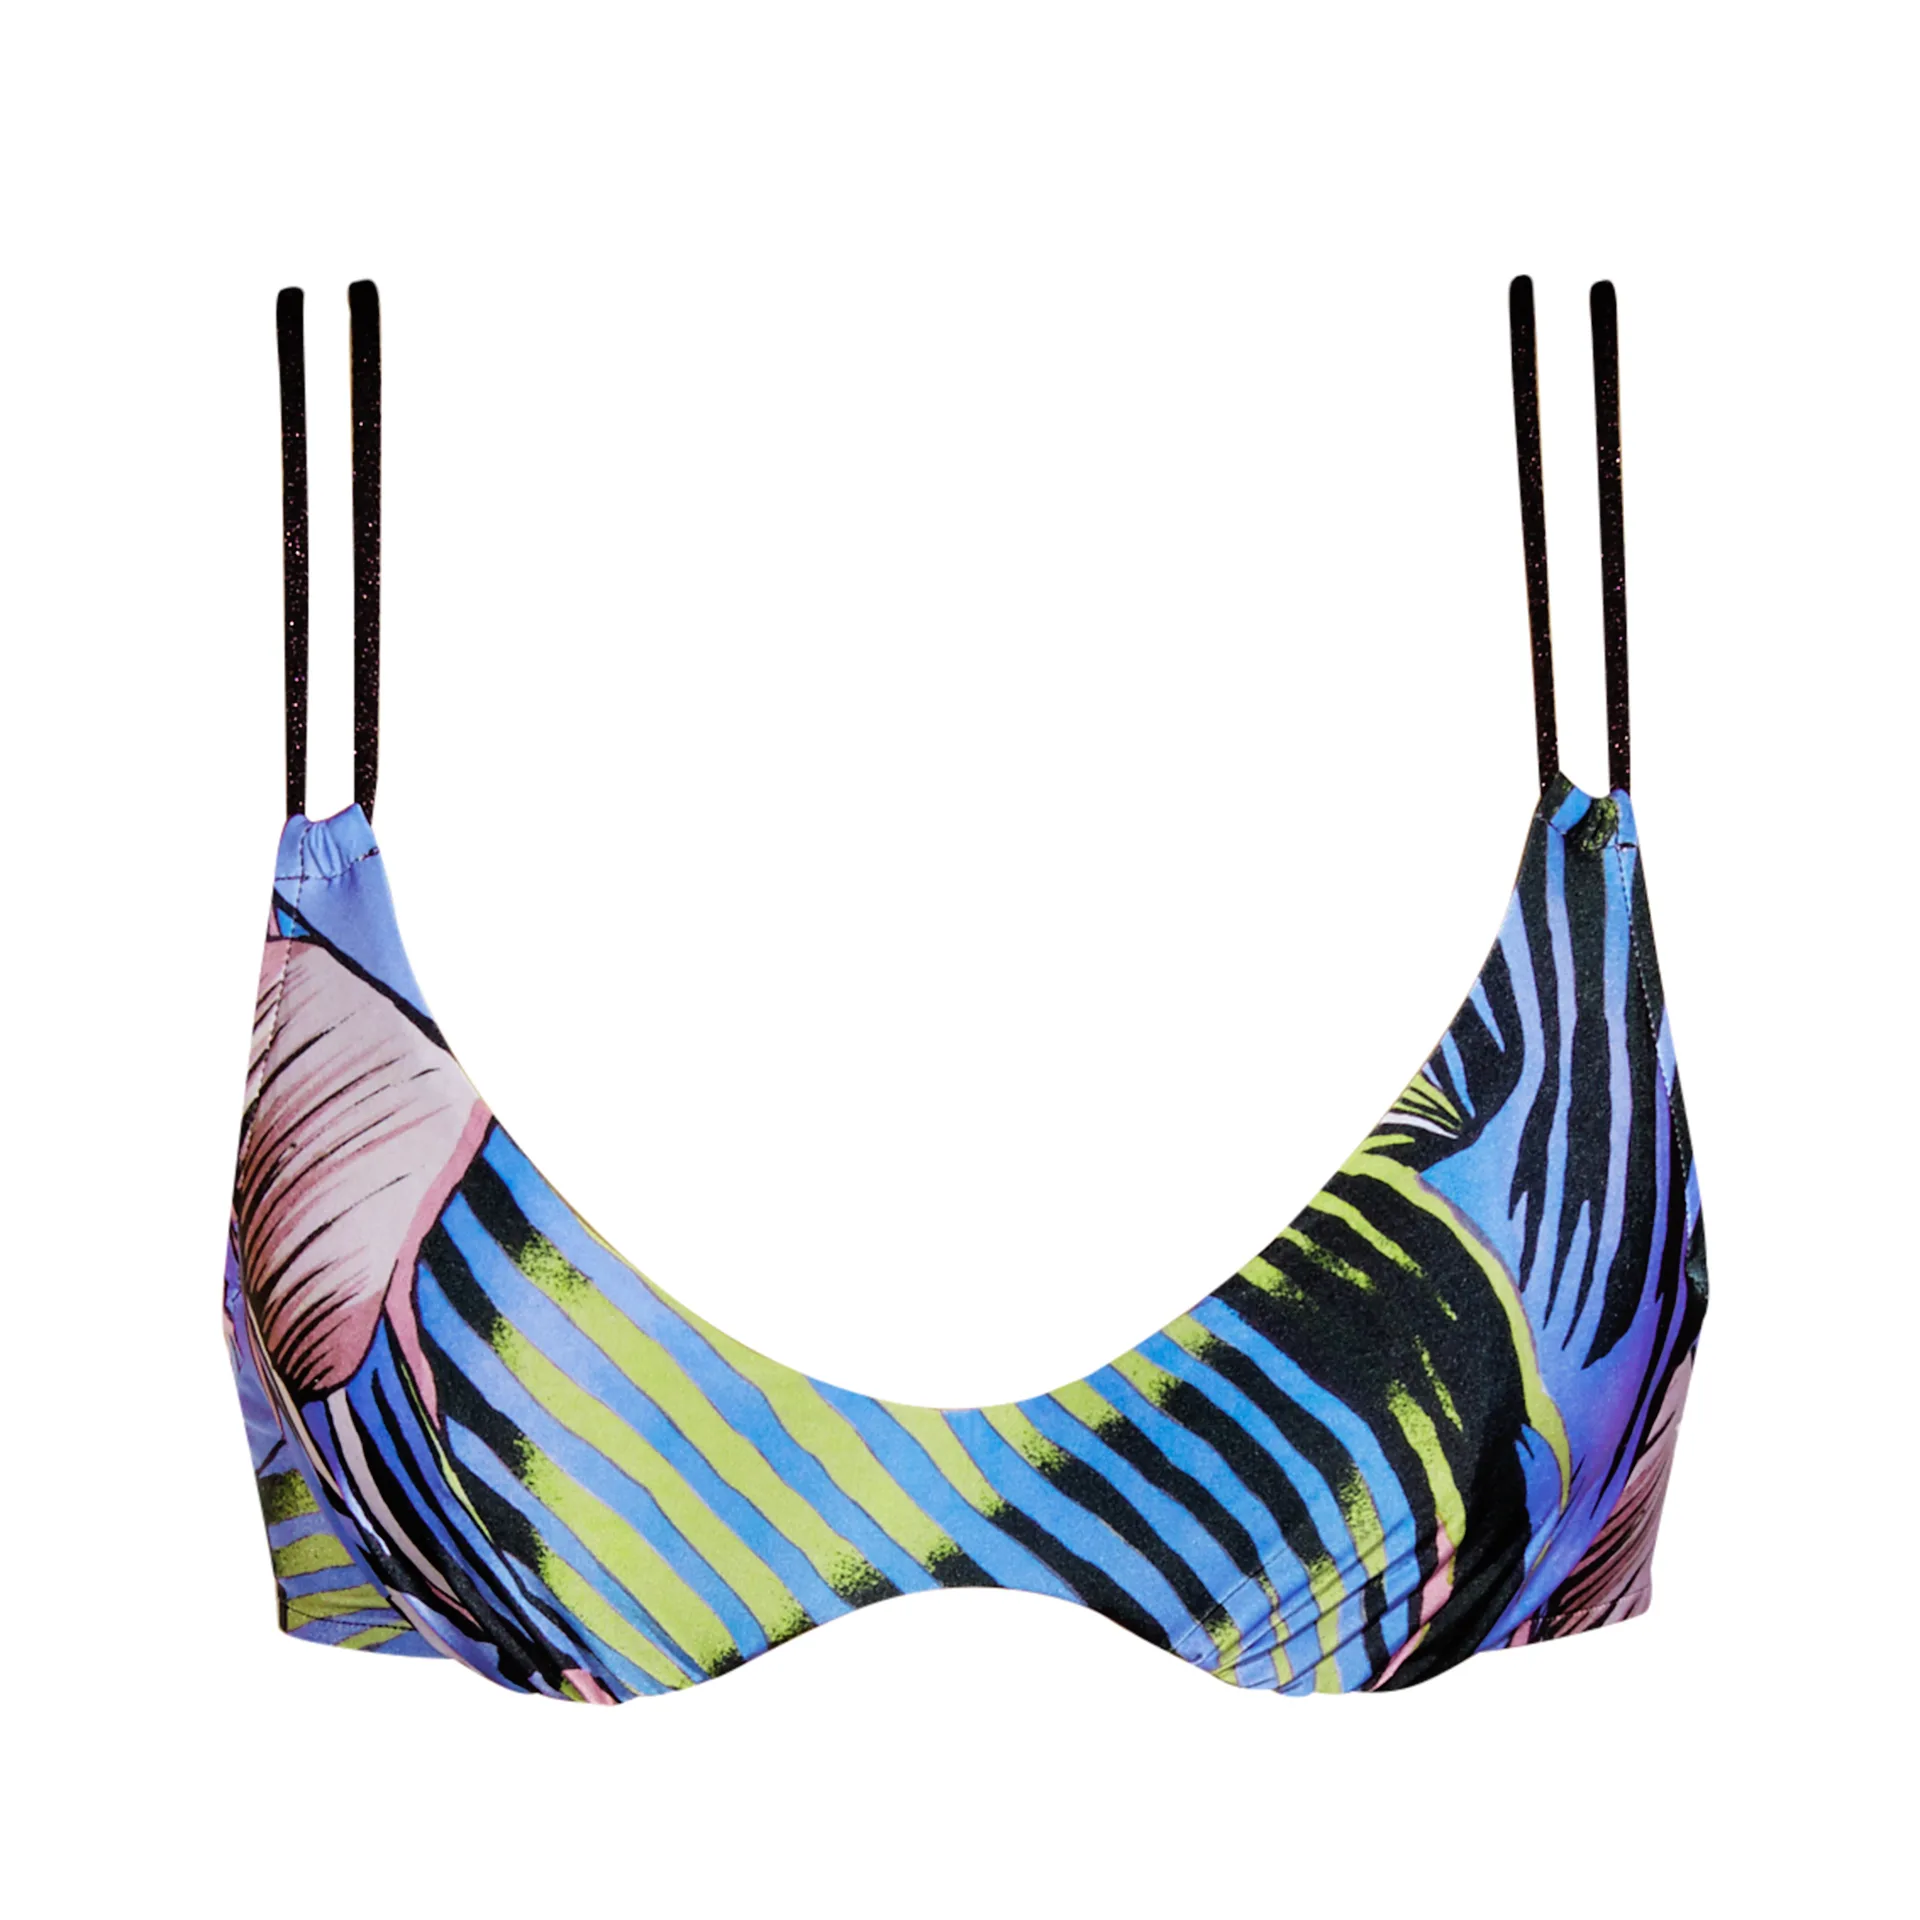 Andres Sarda Swimwear MAHONY blue bikini briefs rio mini